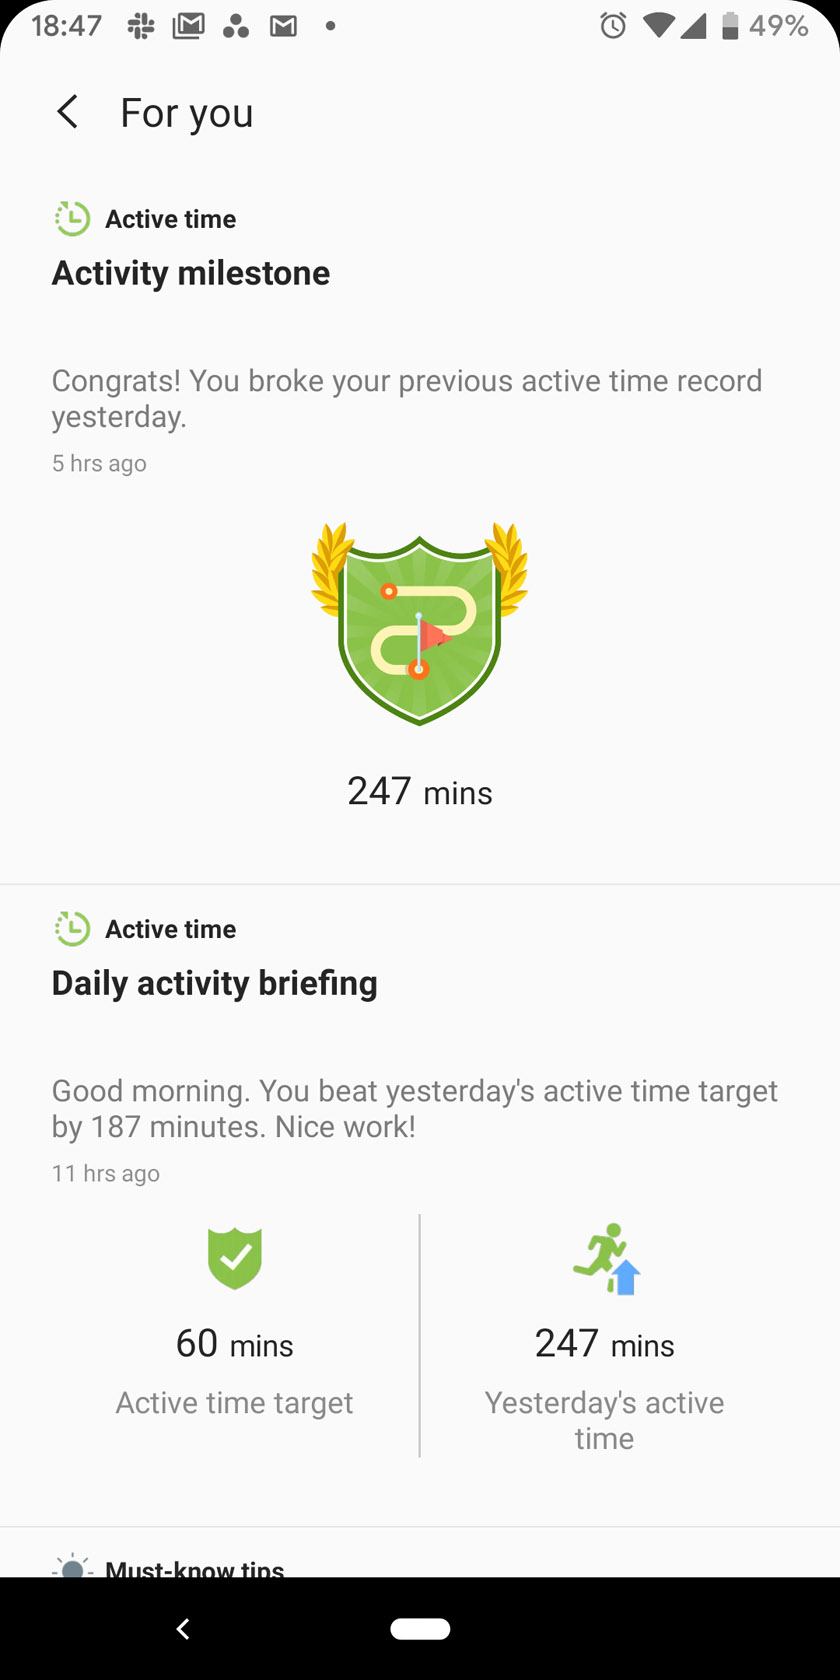 Samsung Health activity milestone